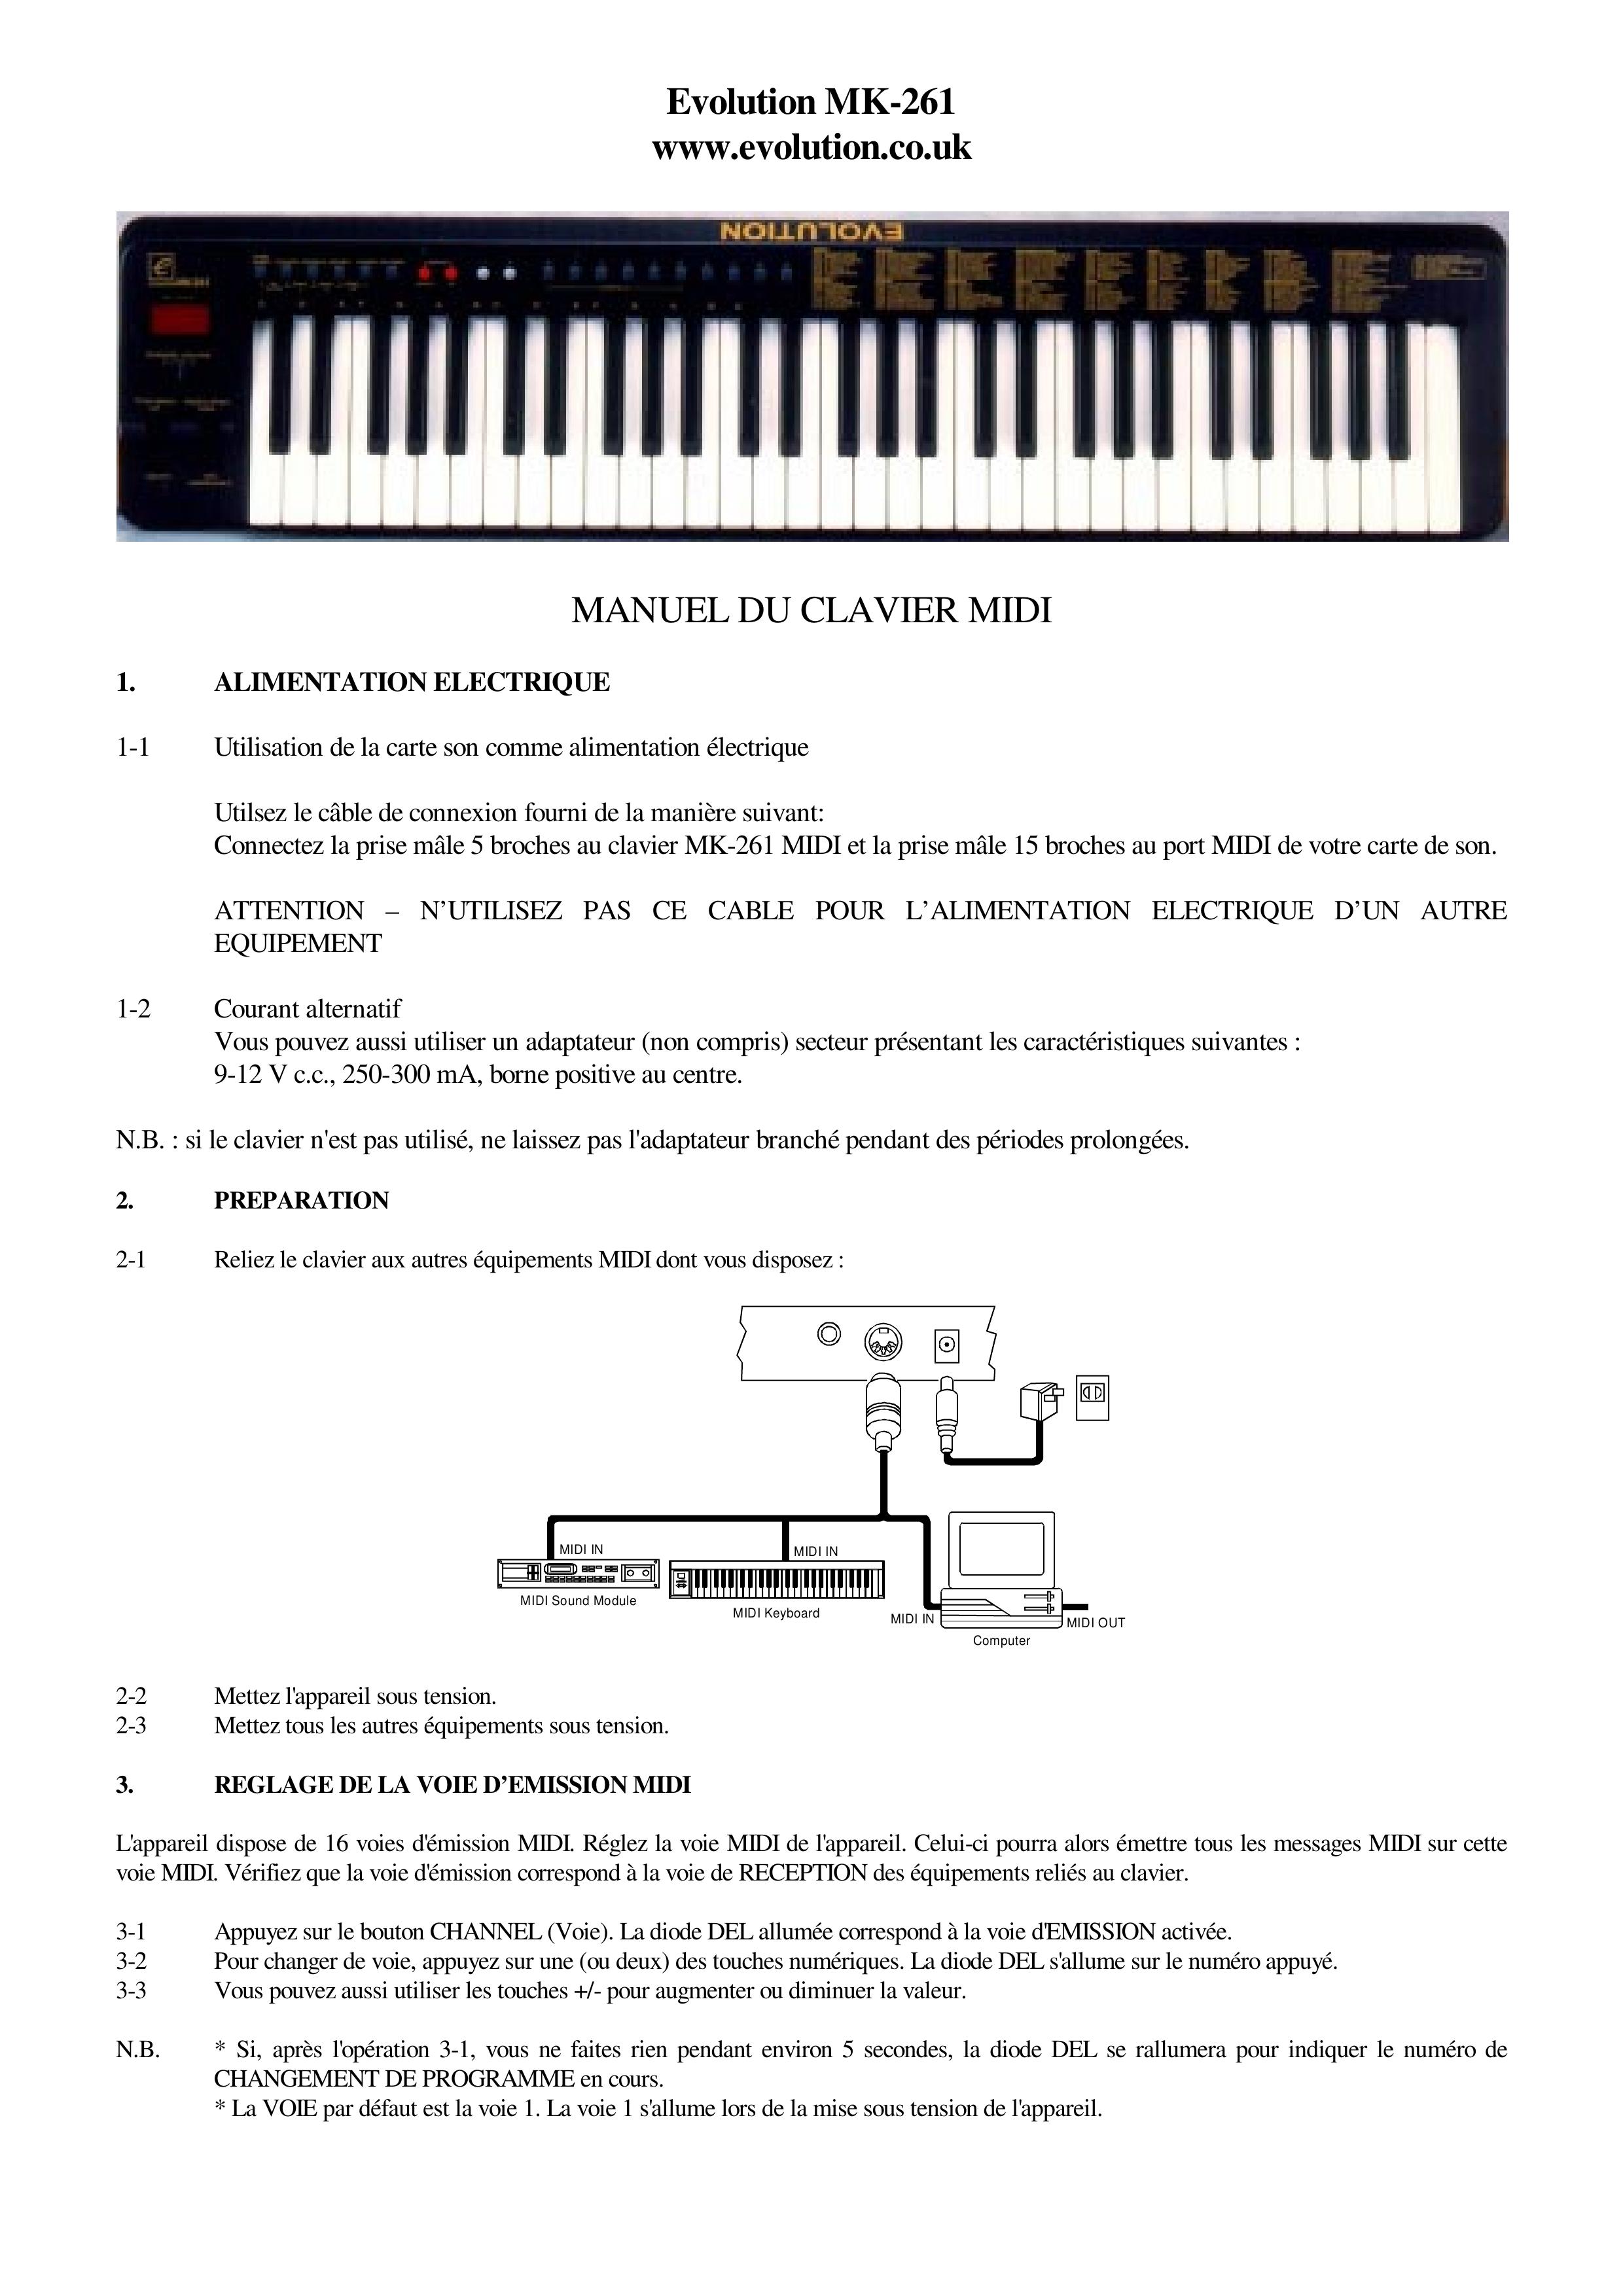 Evolution Technologies ME 102 Electronic Keyboard User Manual